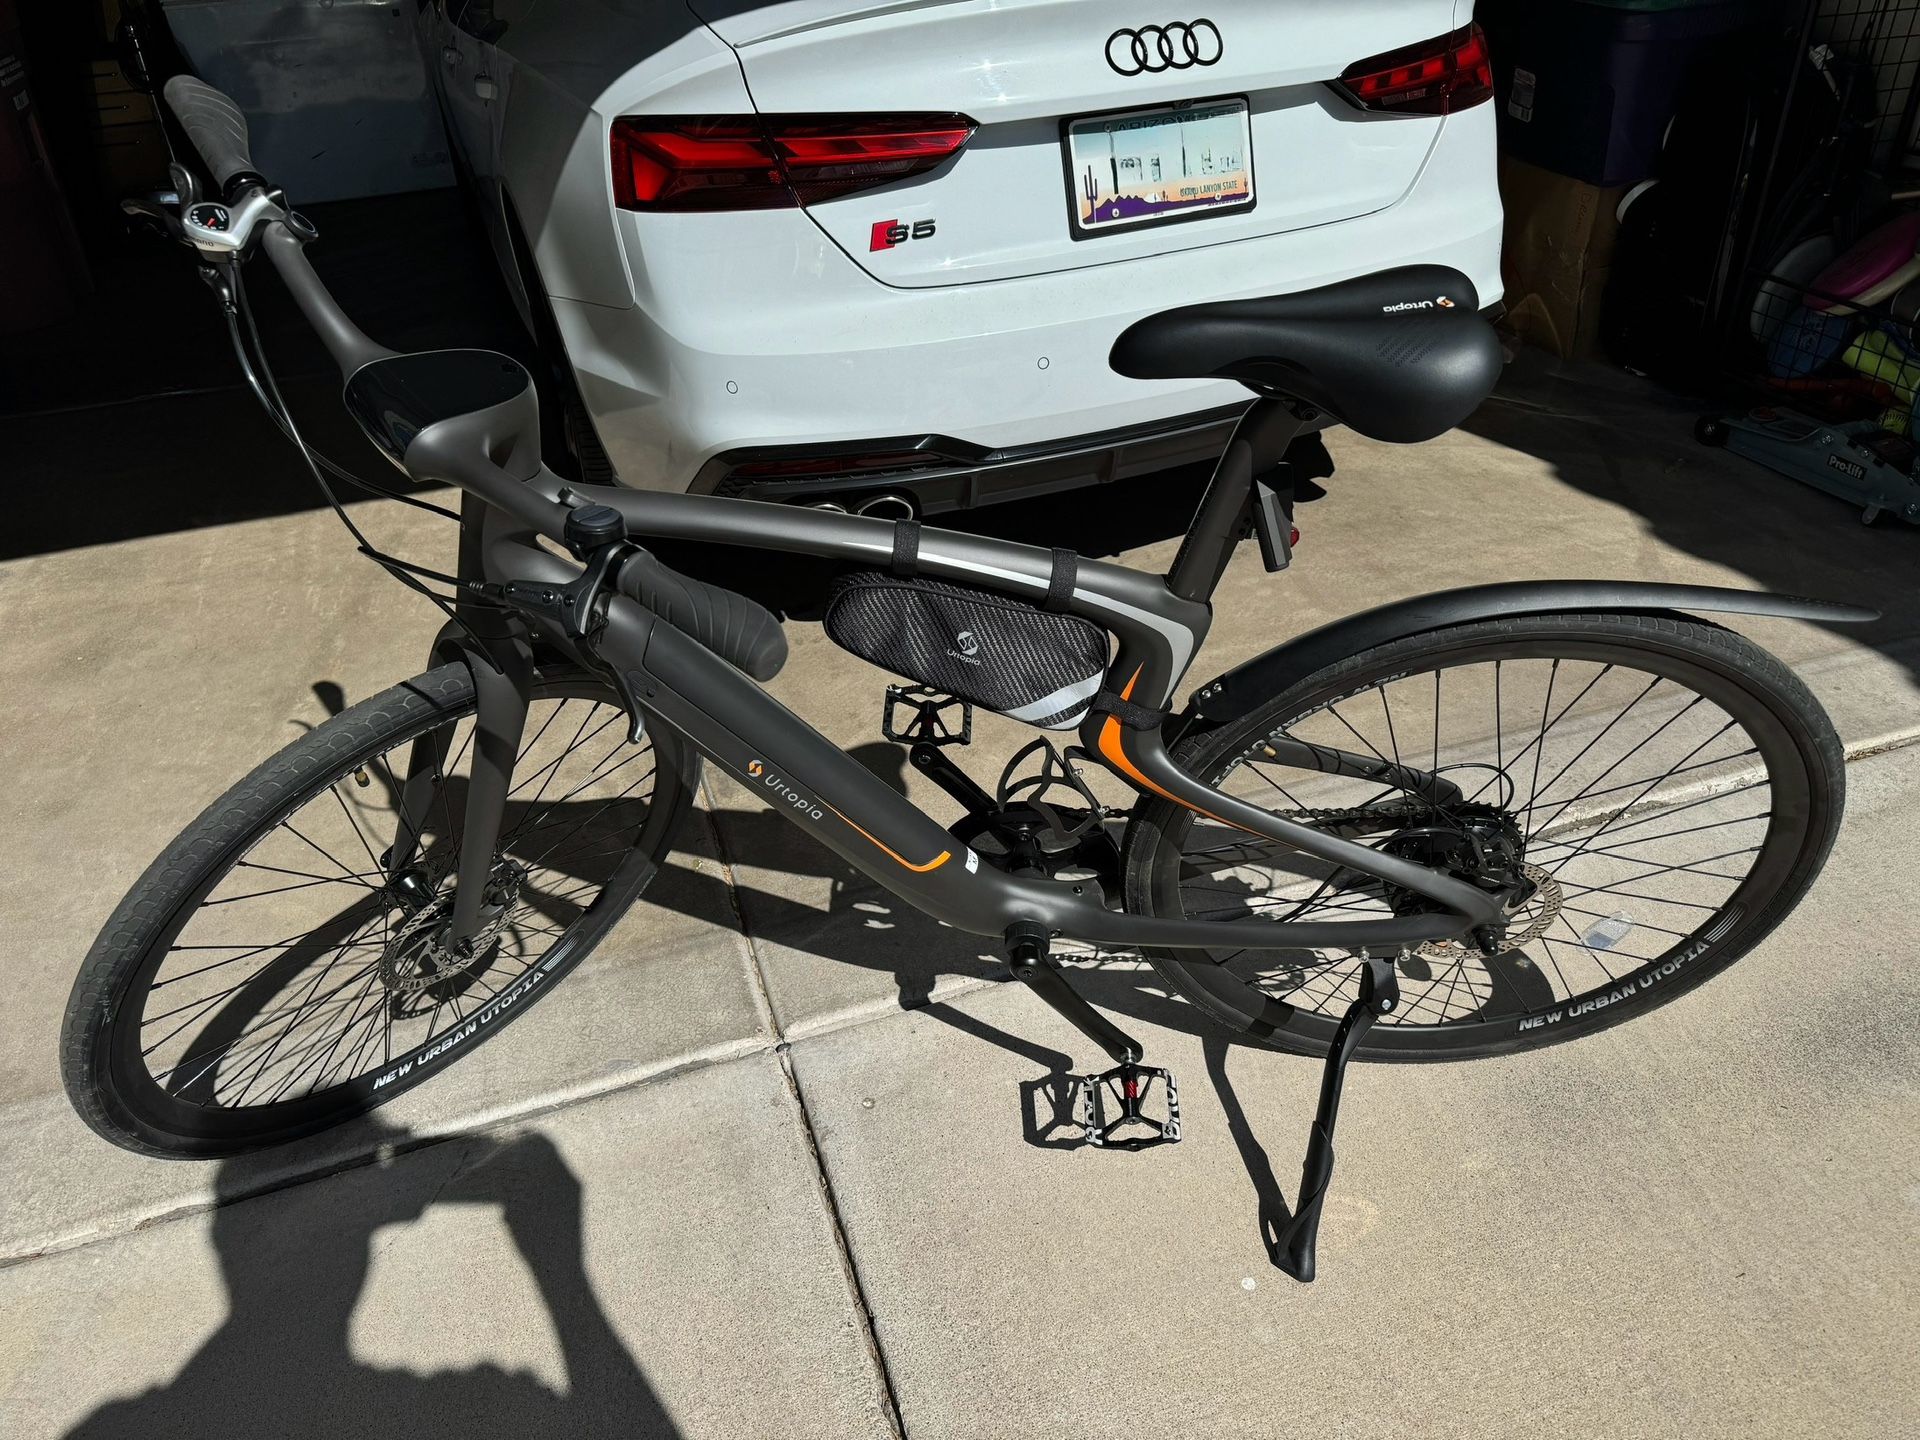 Urtopia Carbon 1S Electric/ Pedal Bike